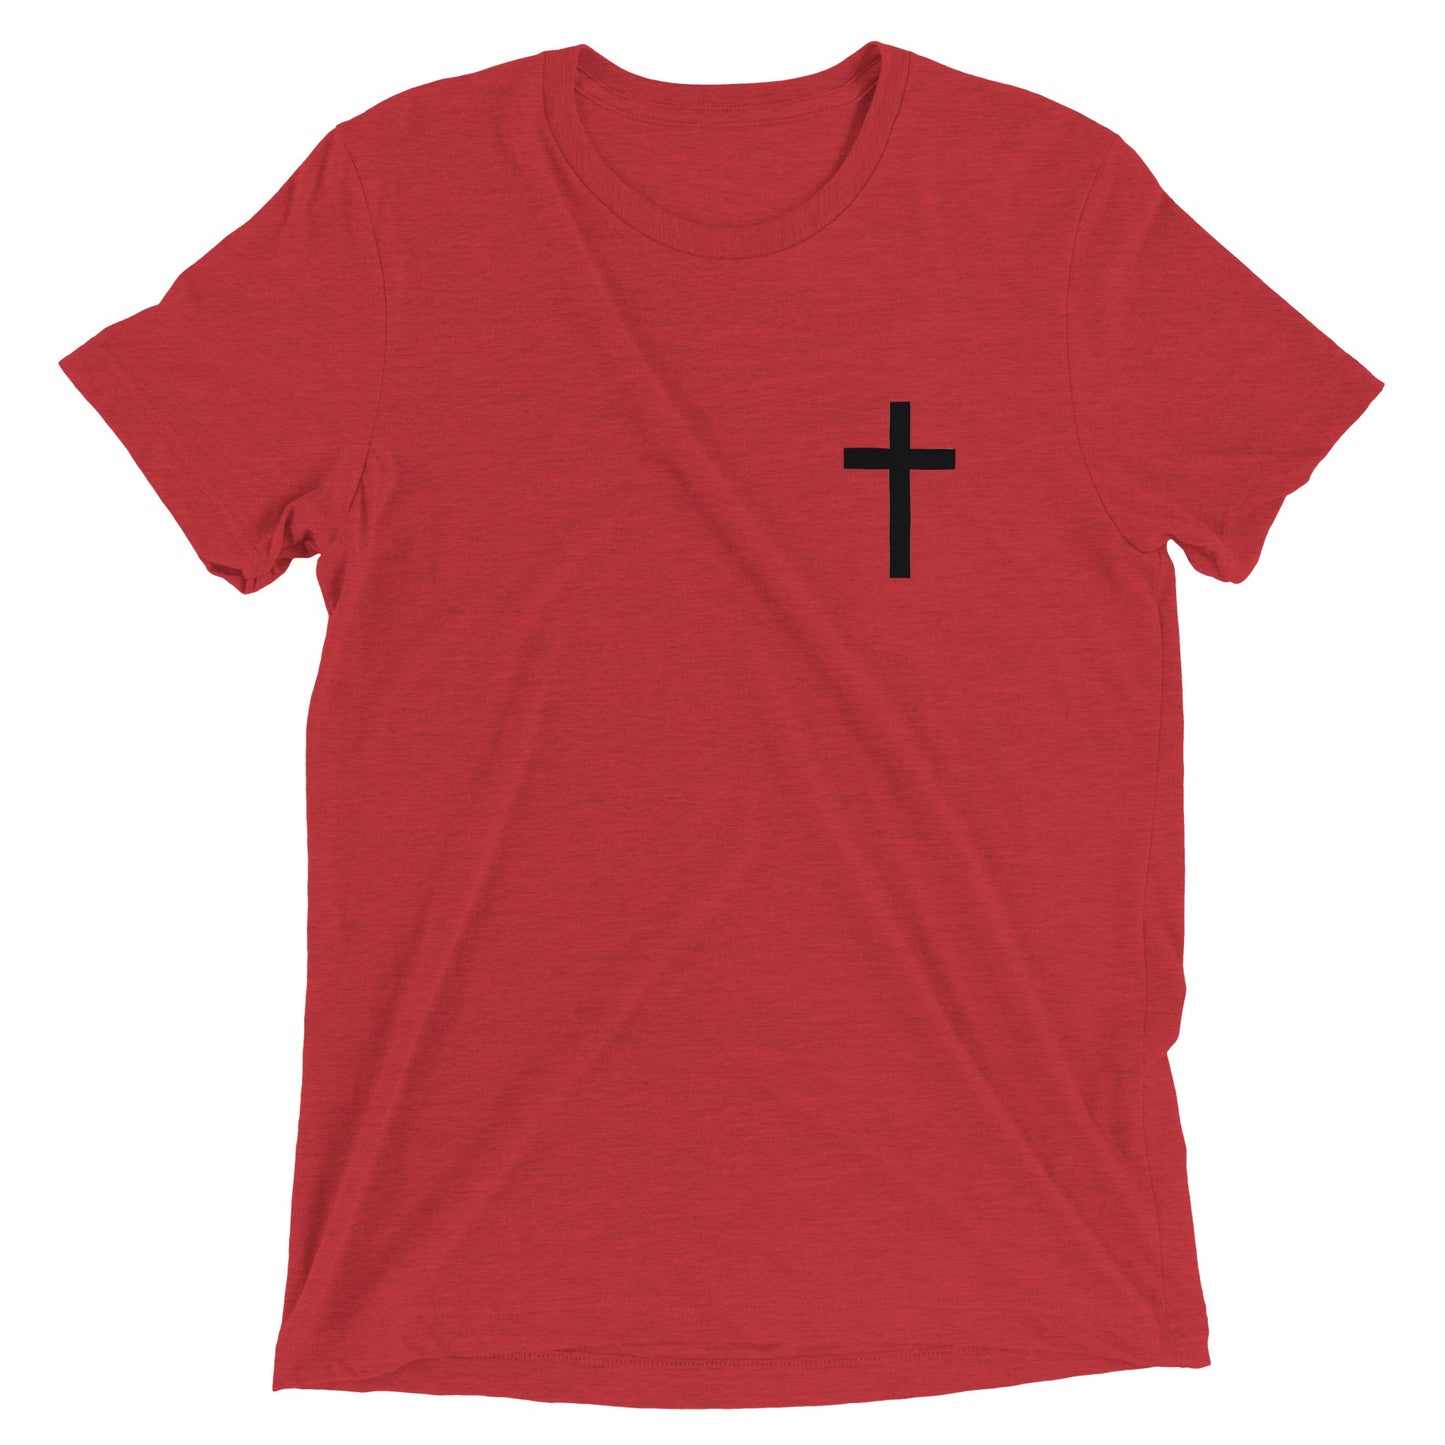 Christian Cross / Everyday is a Fresh Start - Triblend Unisex Crewneck T-shirt